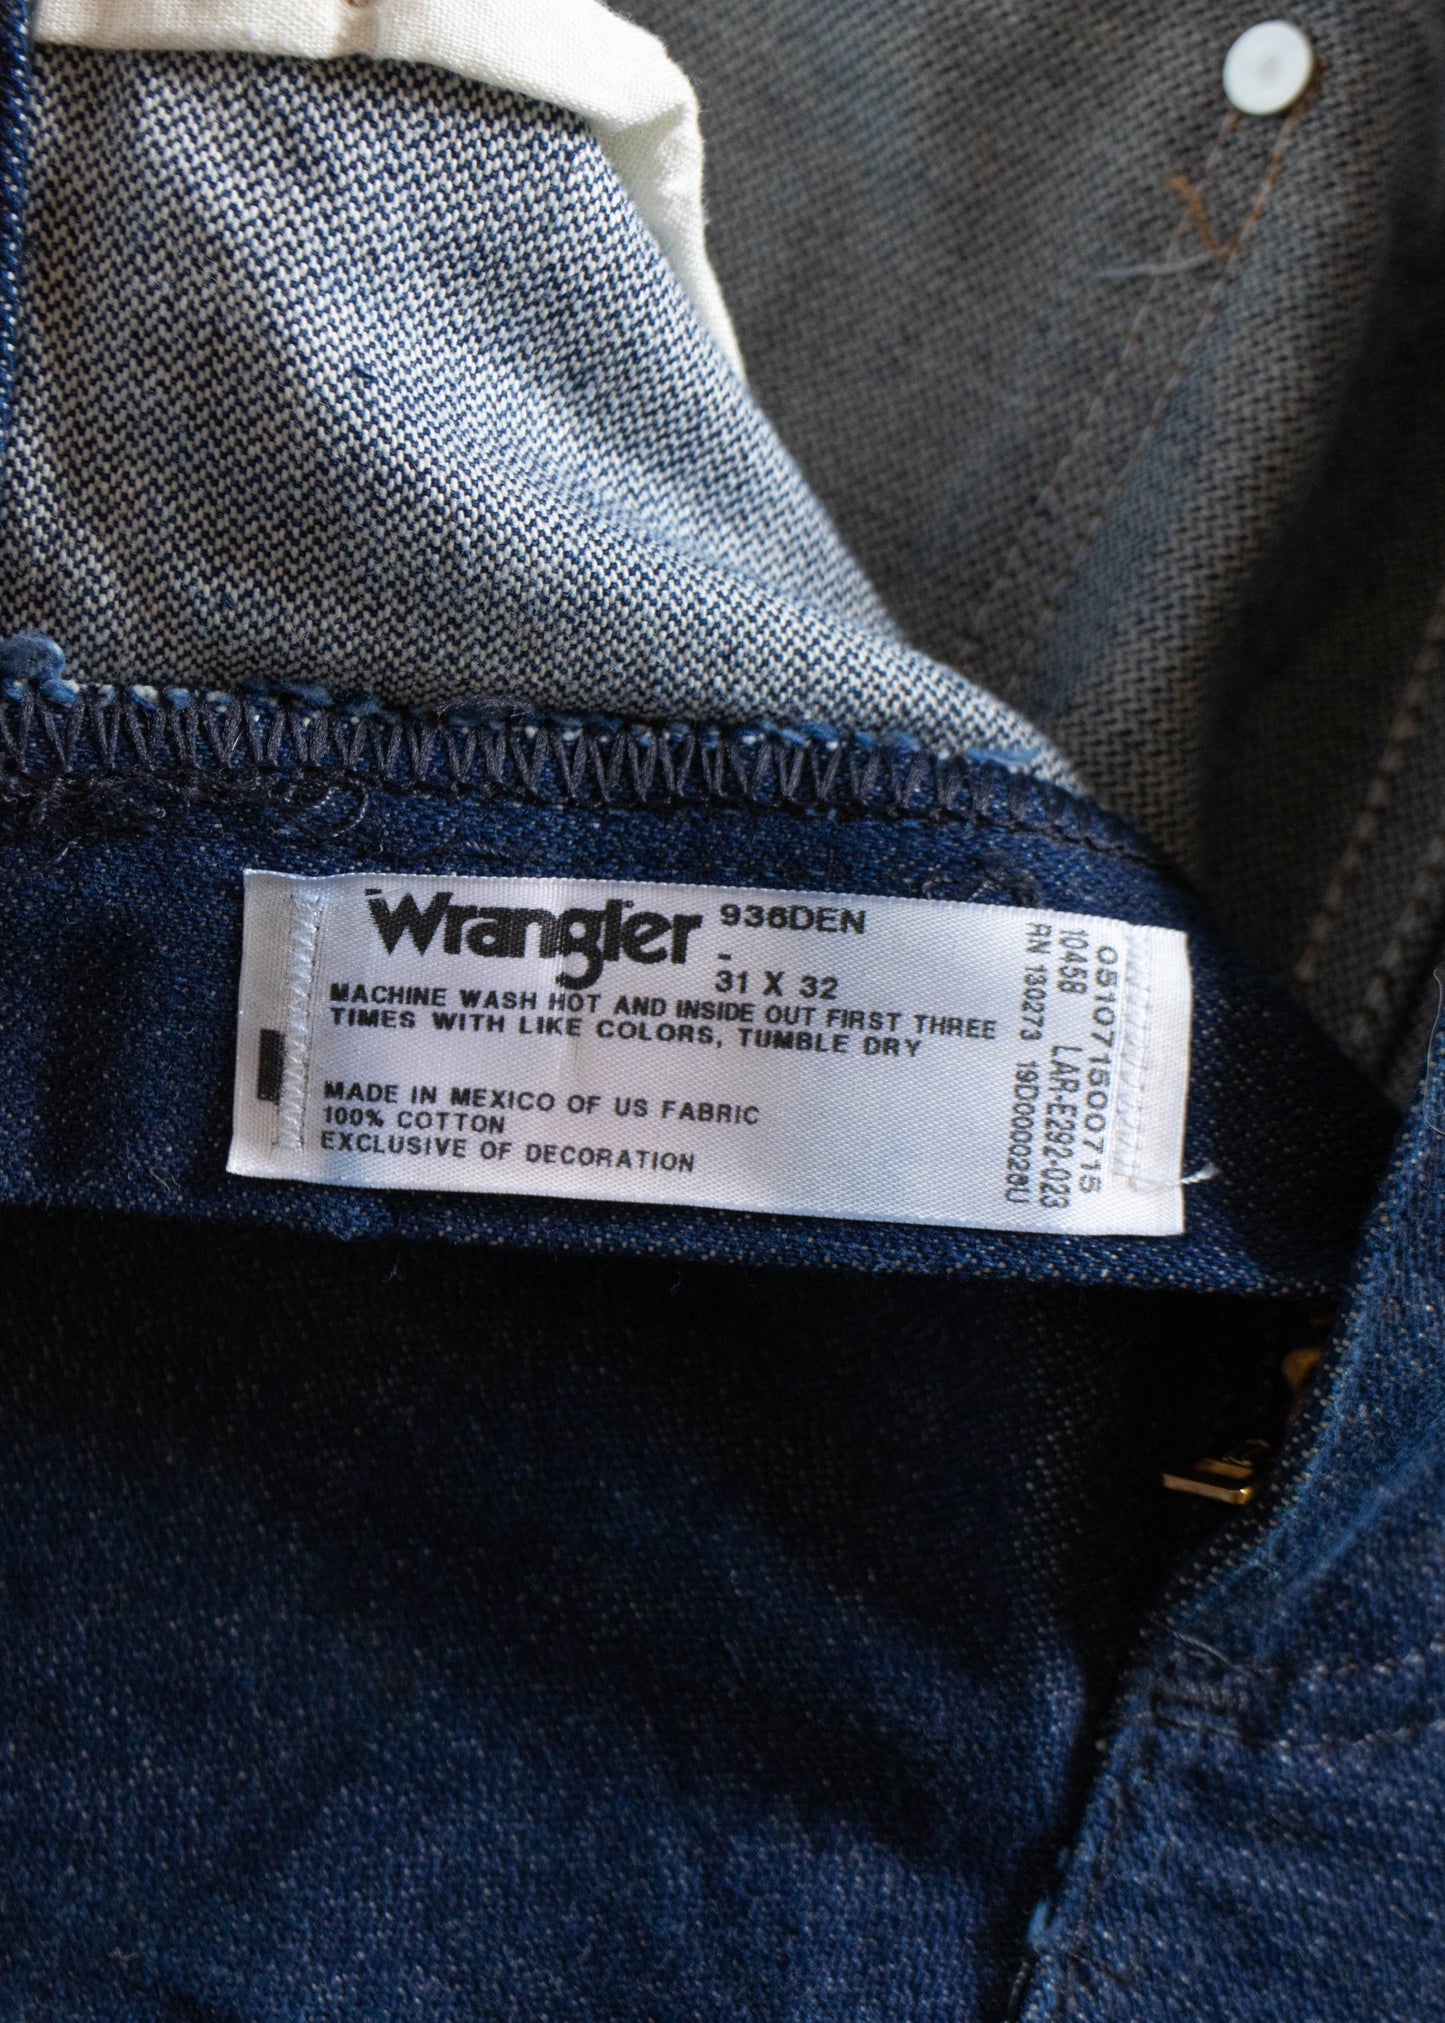 1980s Wrangler Darkwash Jeans Size Women's 27 Men's 30